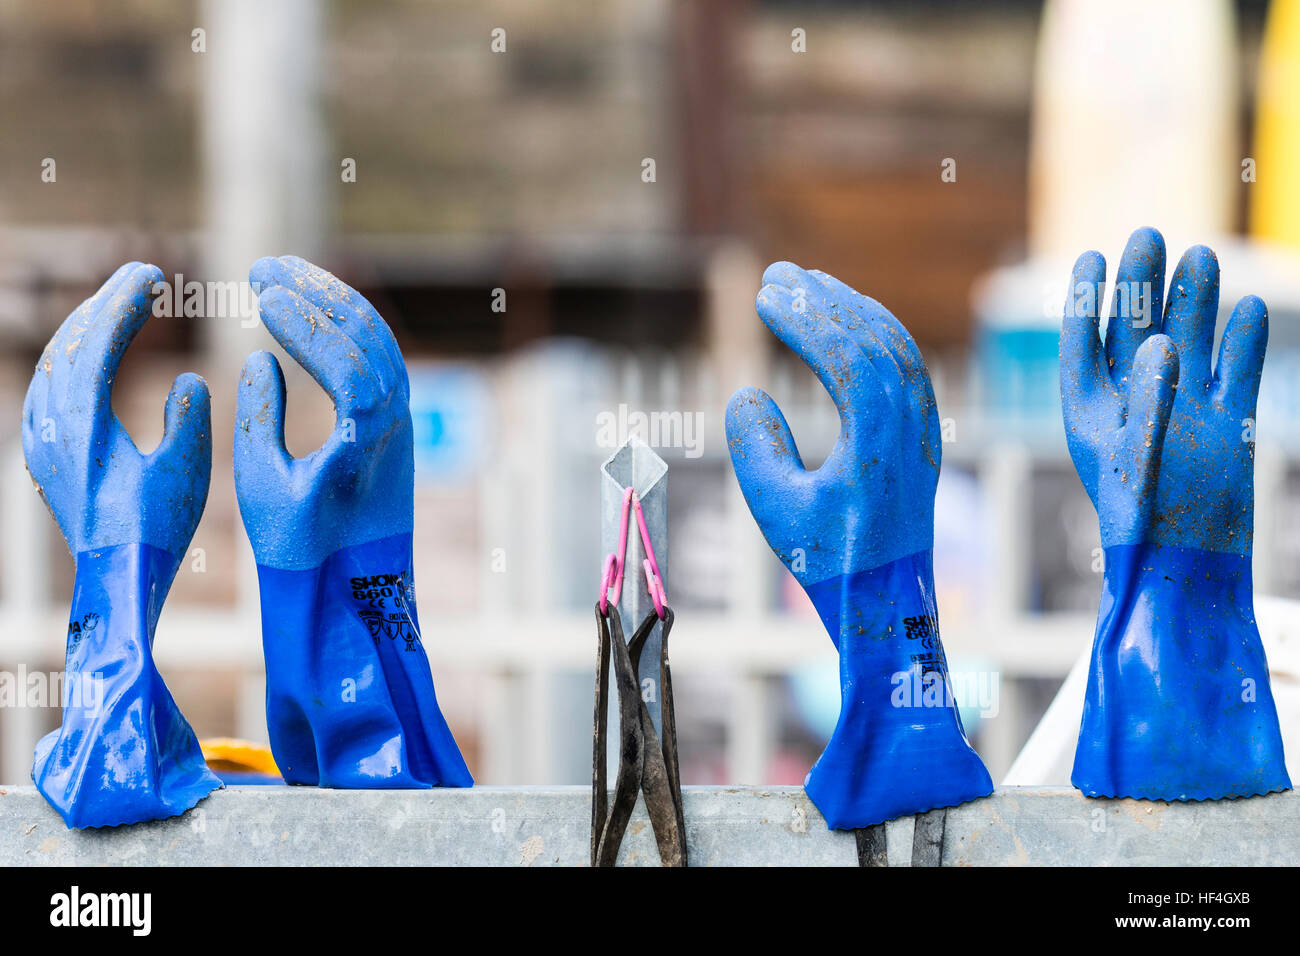 England, Whitstable. Zwei paar blaue Gummihandschuhe verließ über Nacht trocknen am Zinken der Metallzaun Stockfoto